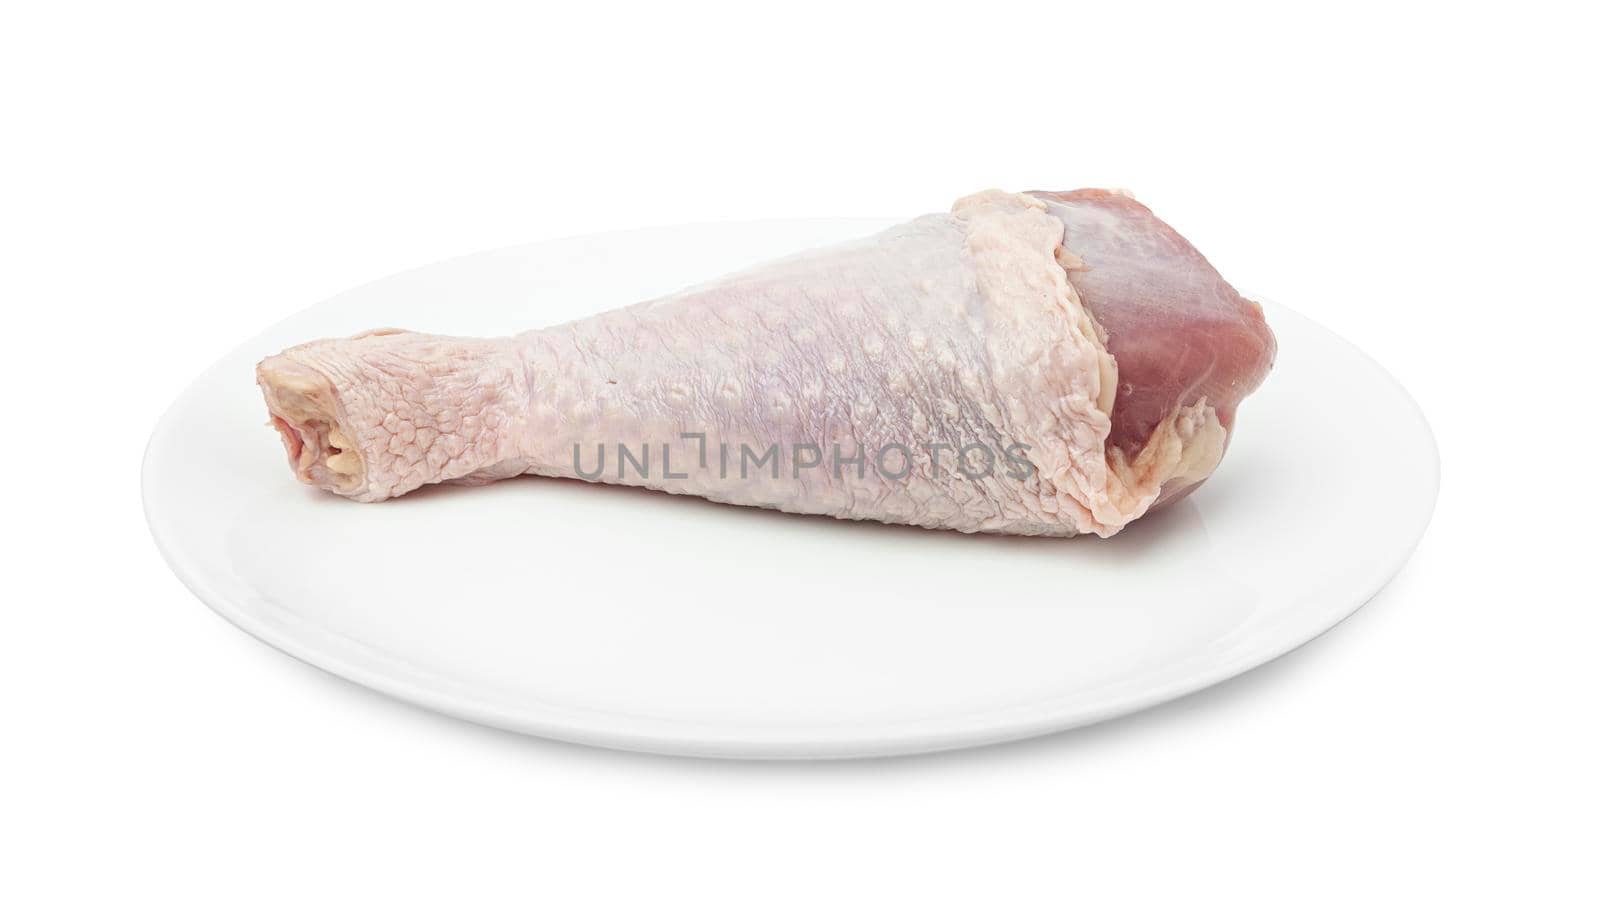 One RAW turkey leg on a white plate by SlayCer